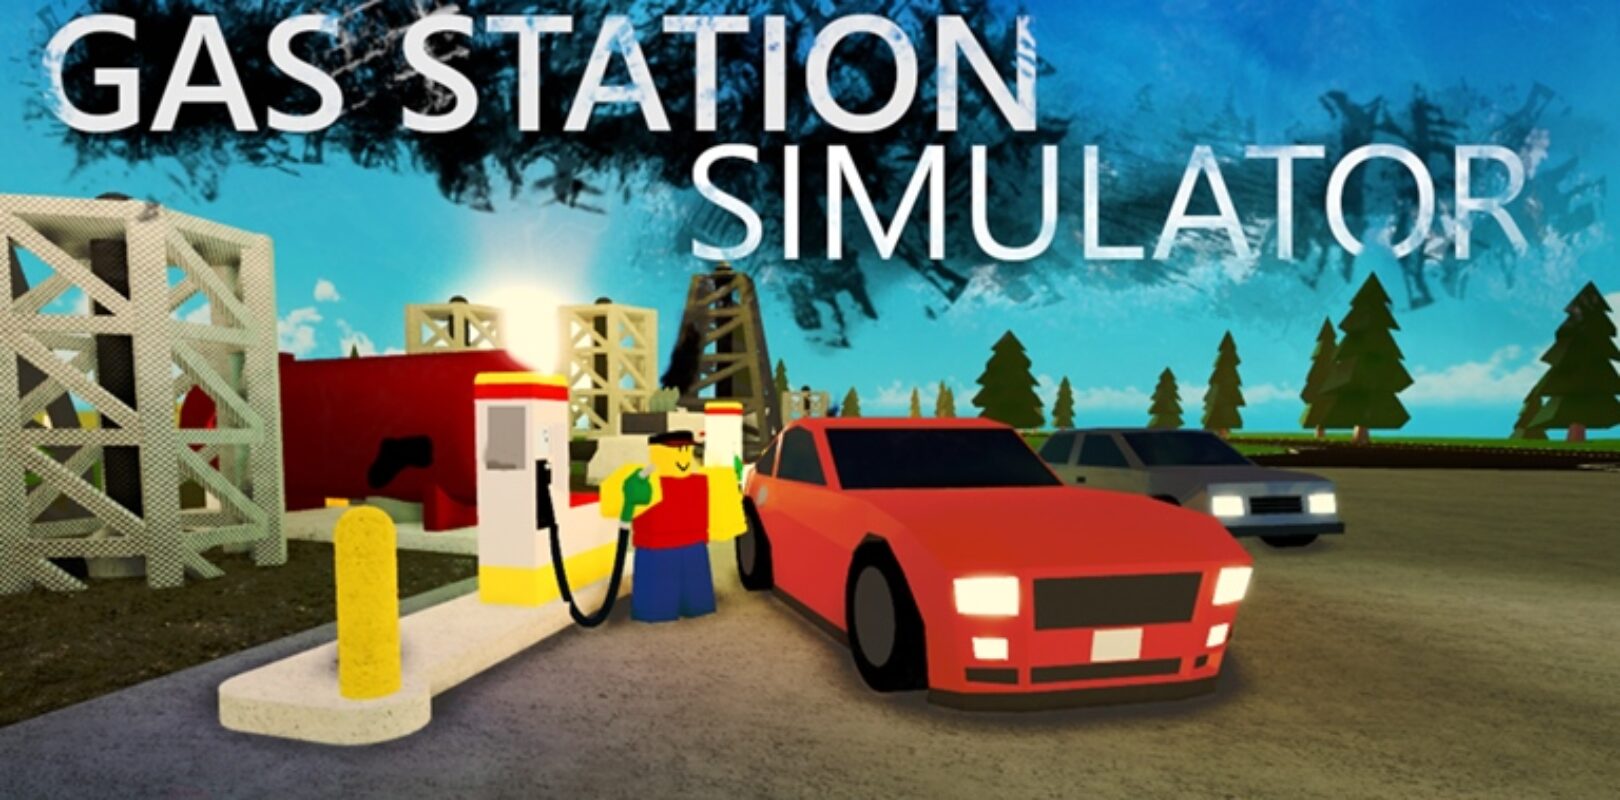 Gas Station Simulator Codes 2020 Pivotal Gamers - roblox spamming simulator codes